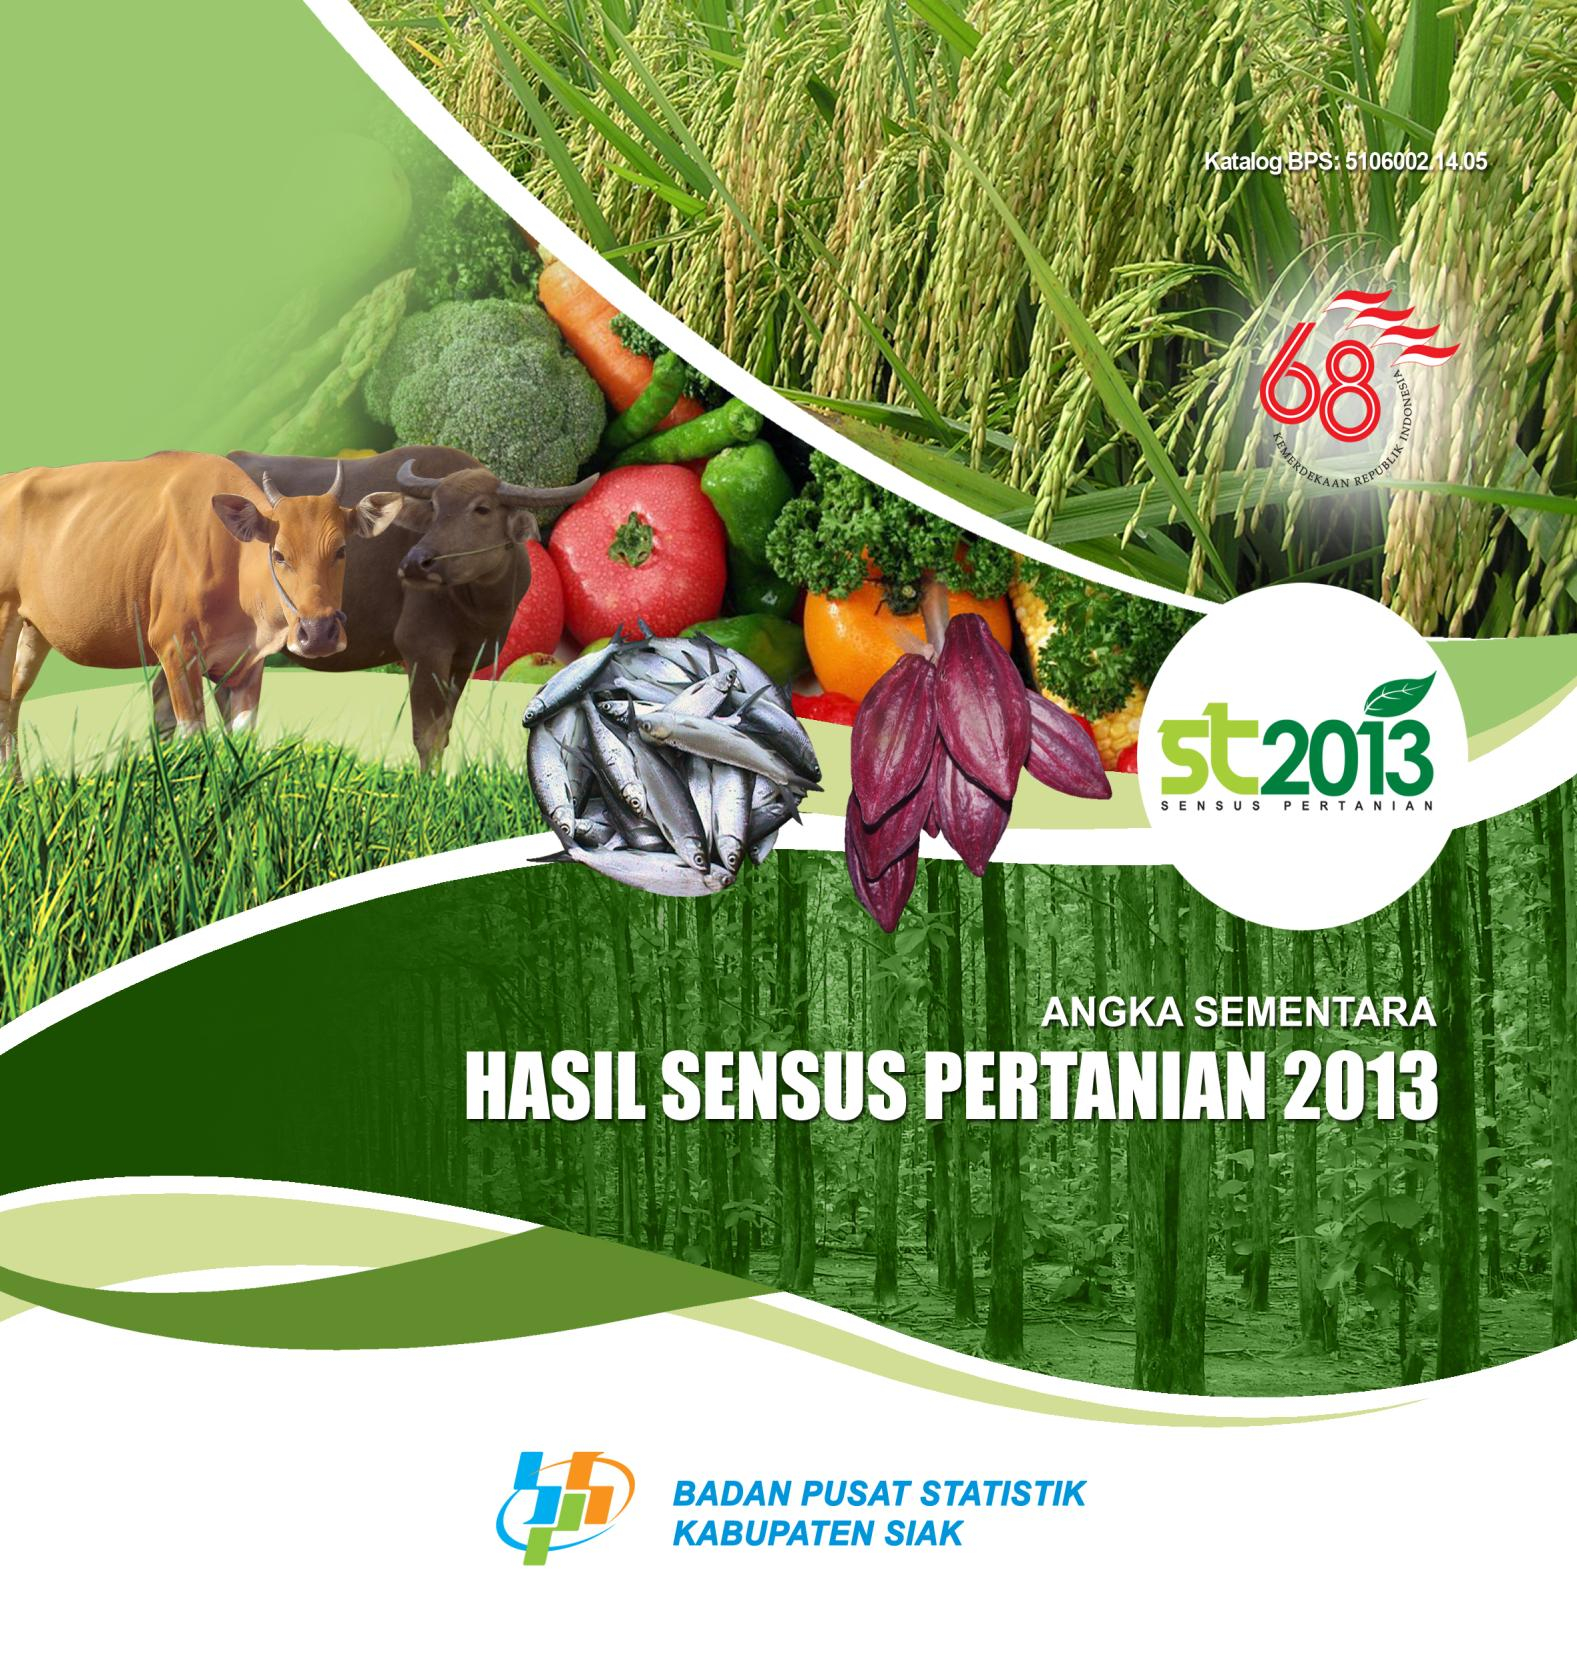 Jumlah rumah tangga usaha pertanian di Indonesia Tahun 2013 sebanyak 36.